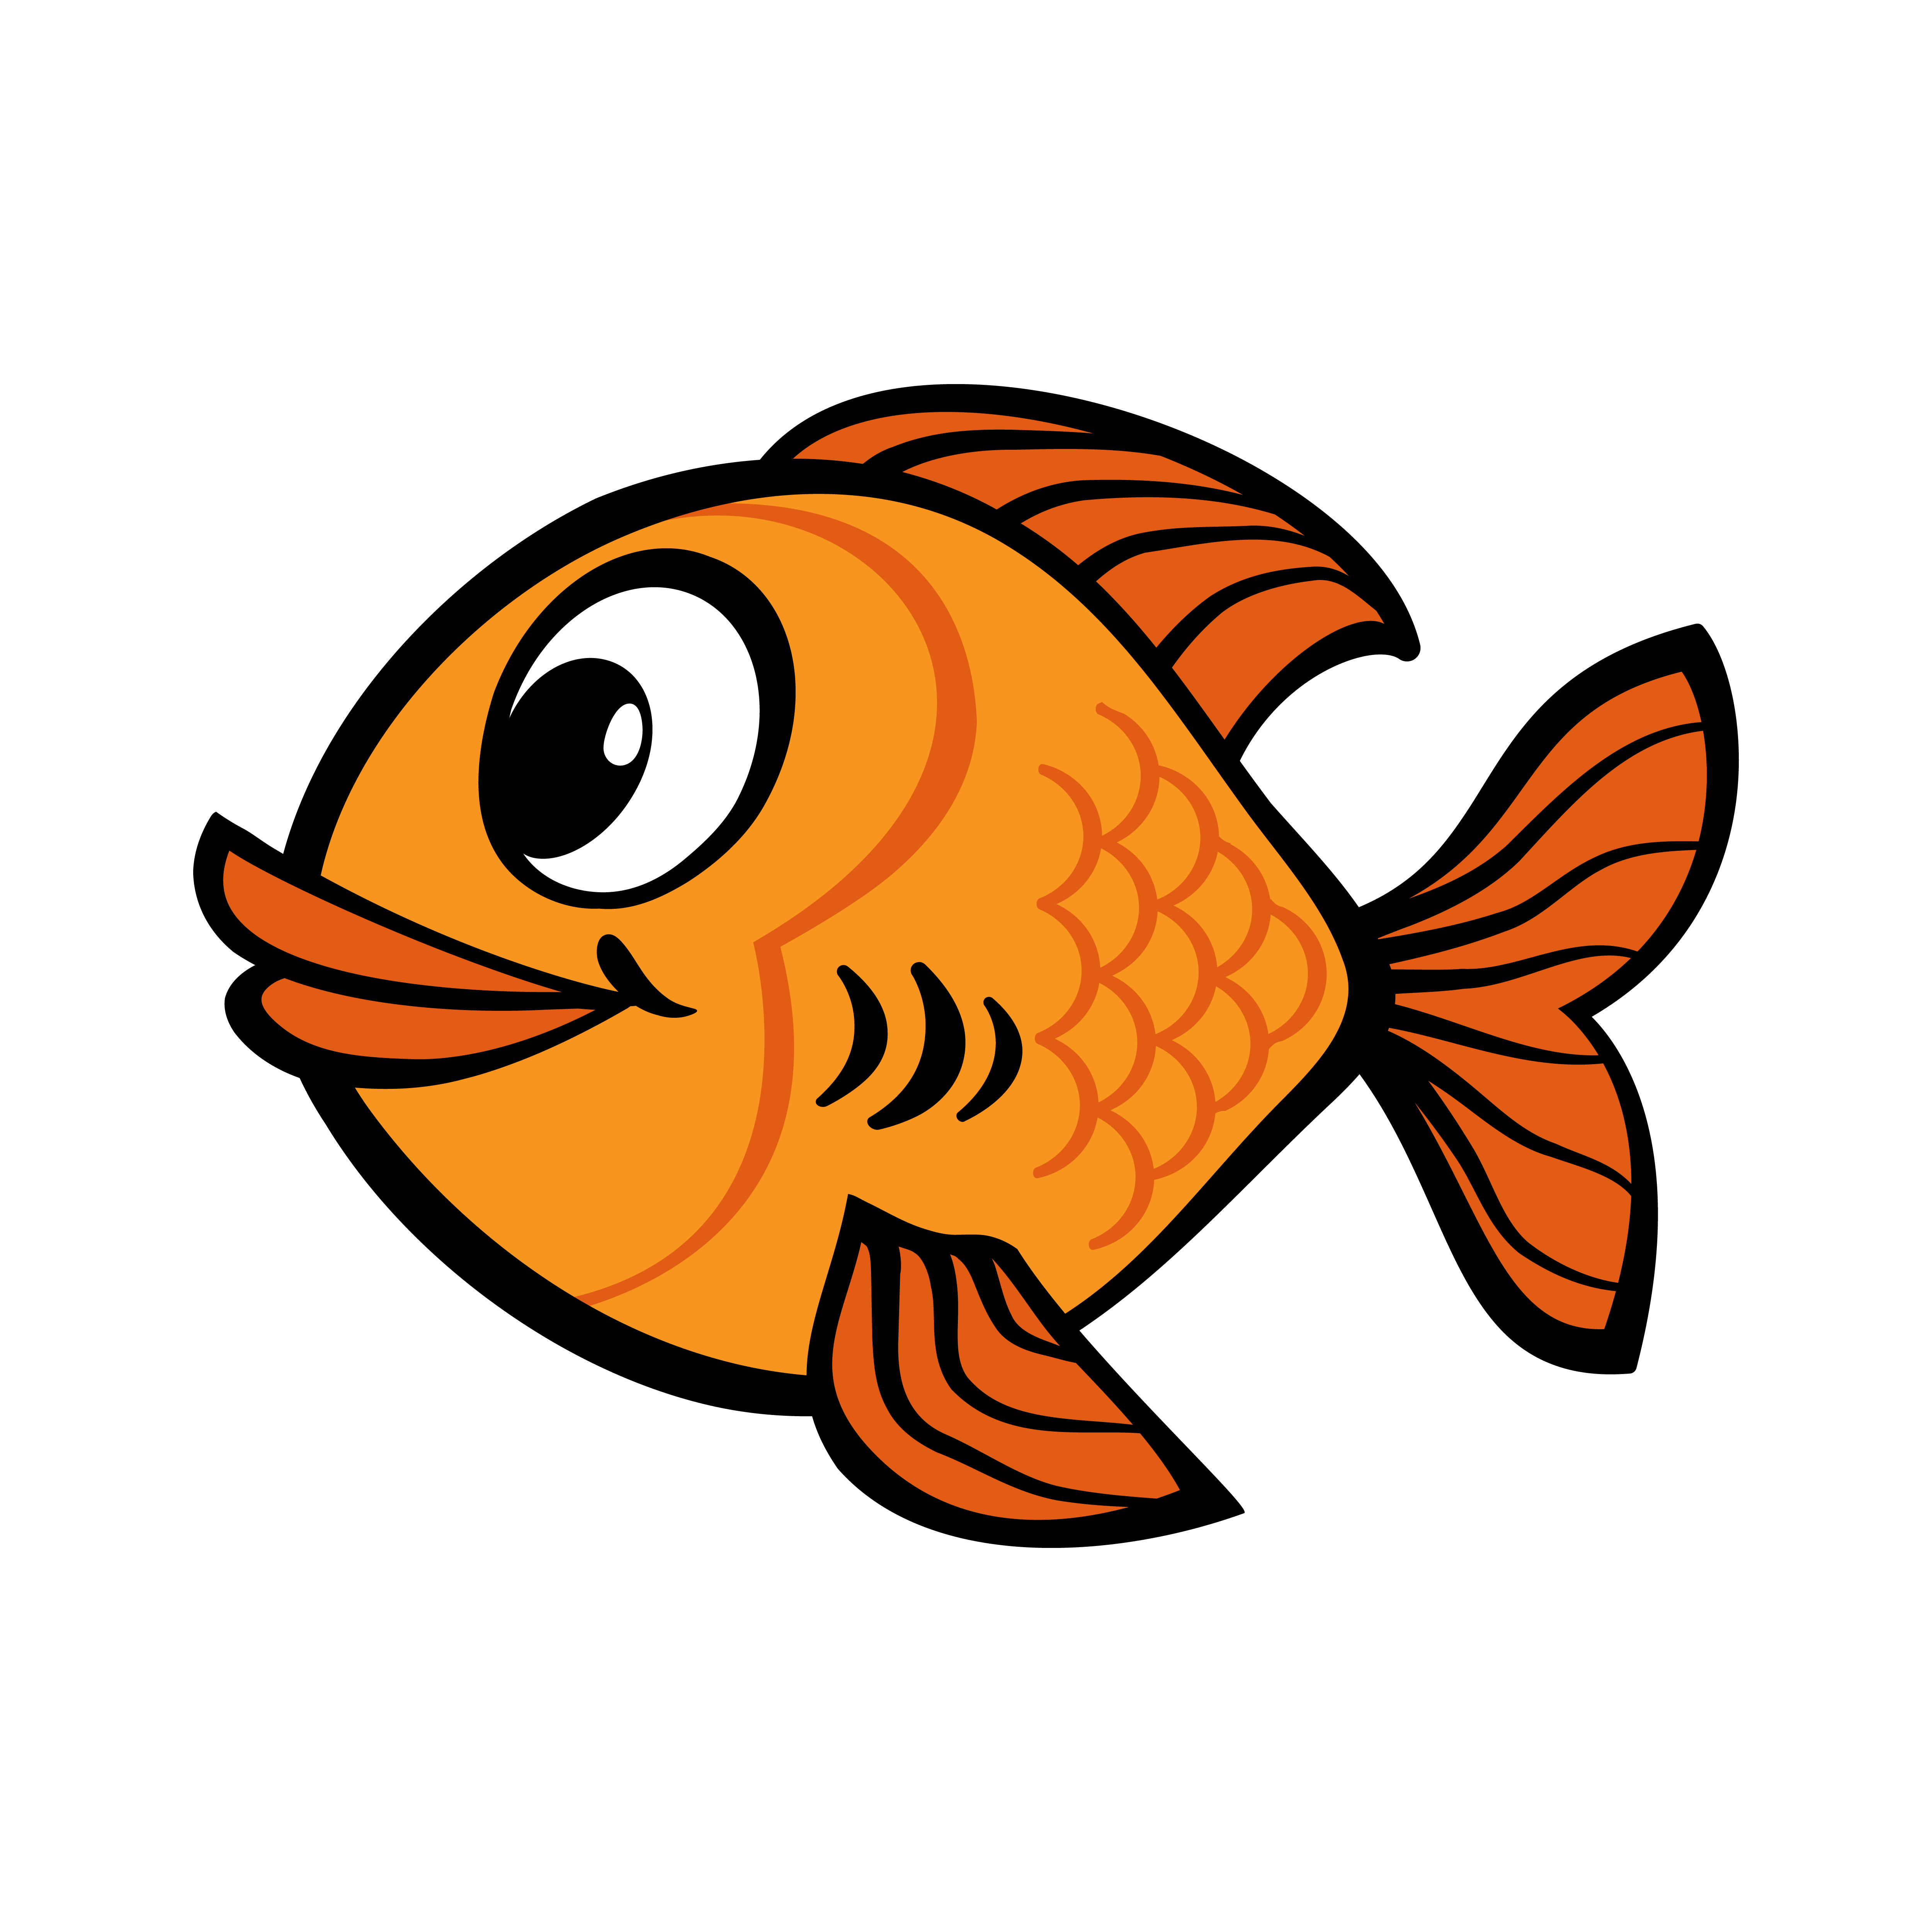 Download Goldfish cartoon vector icon - Download Free Vectors ...